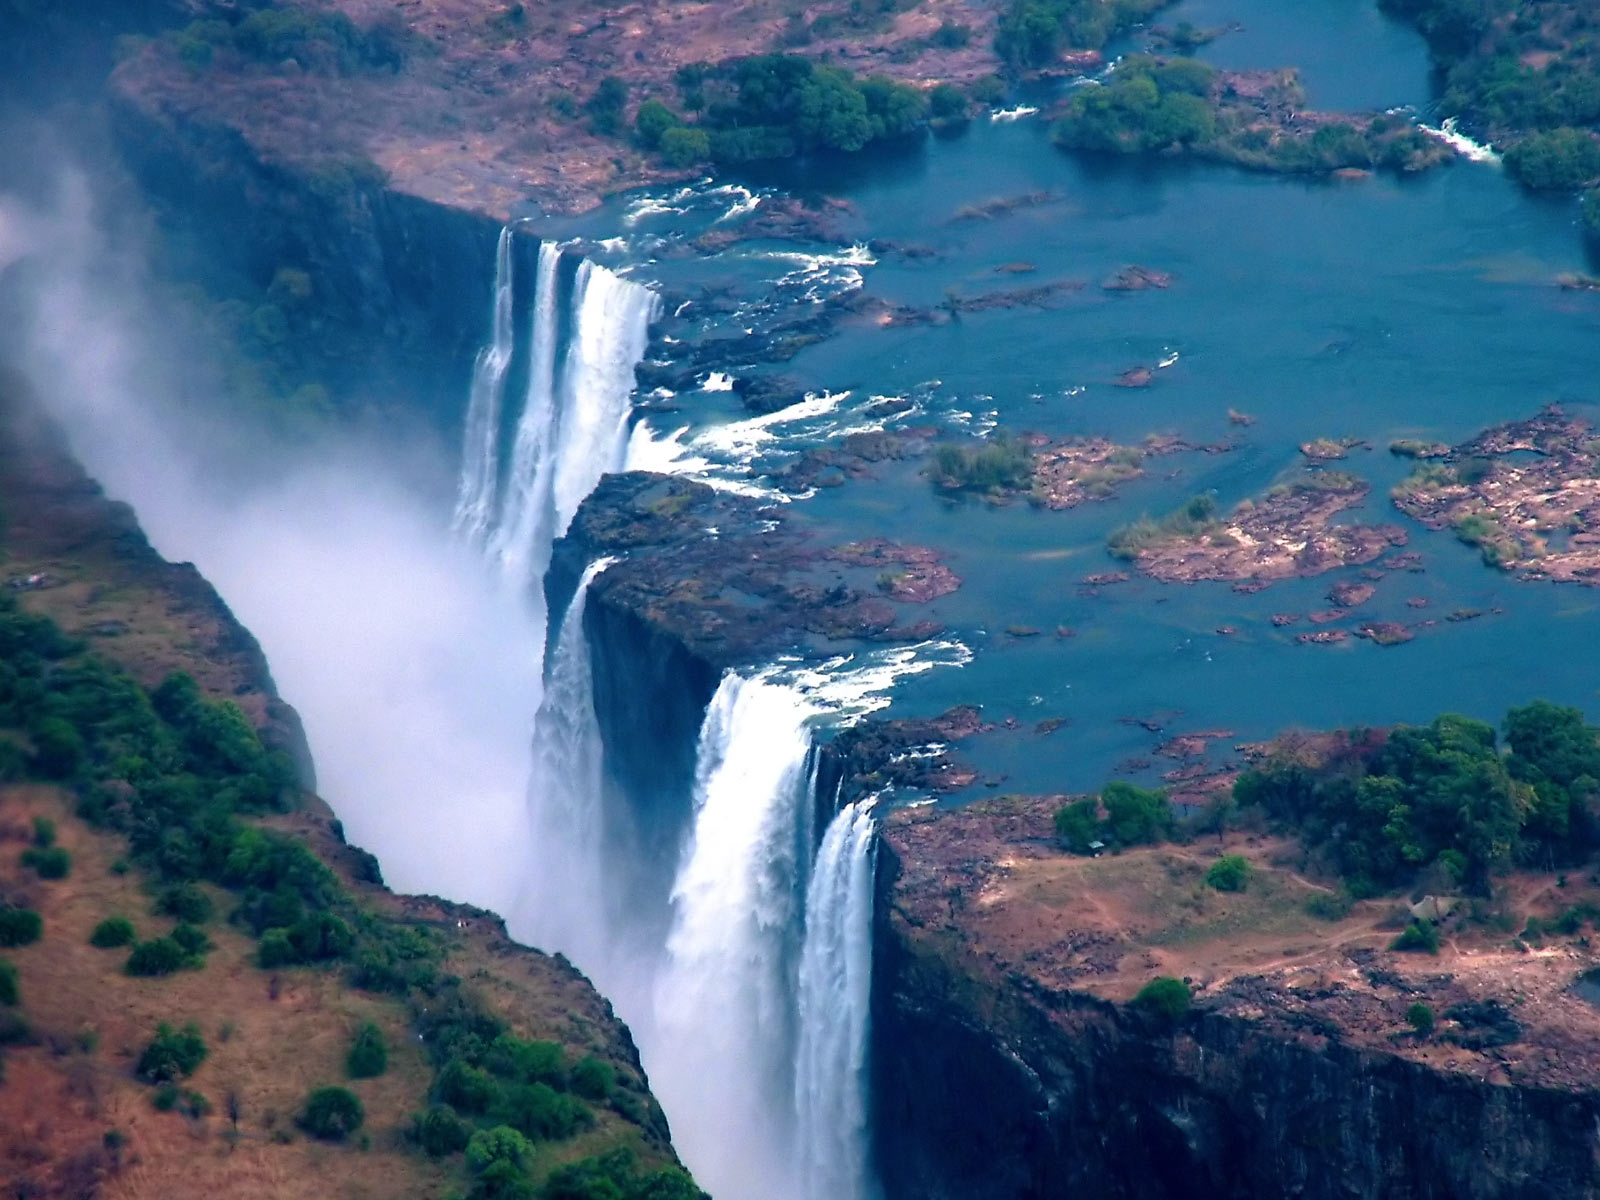 Viktorijini+Vodopadi+%2528Victoria+Falls%2529+Top+Turisti%25C4%258Dka+Atrakcija+Victoria_Falls%252C_Zambia.jpg